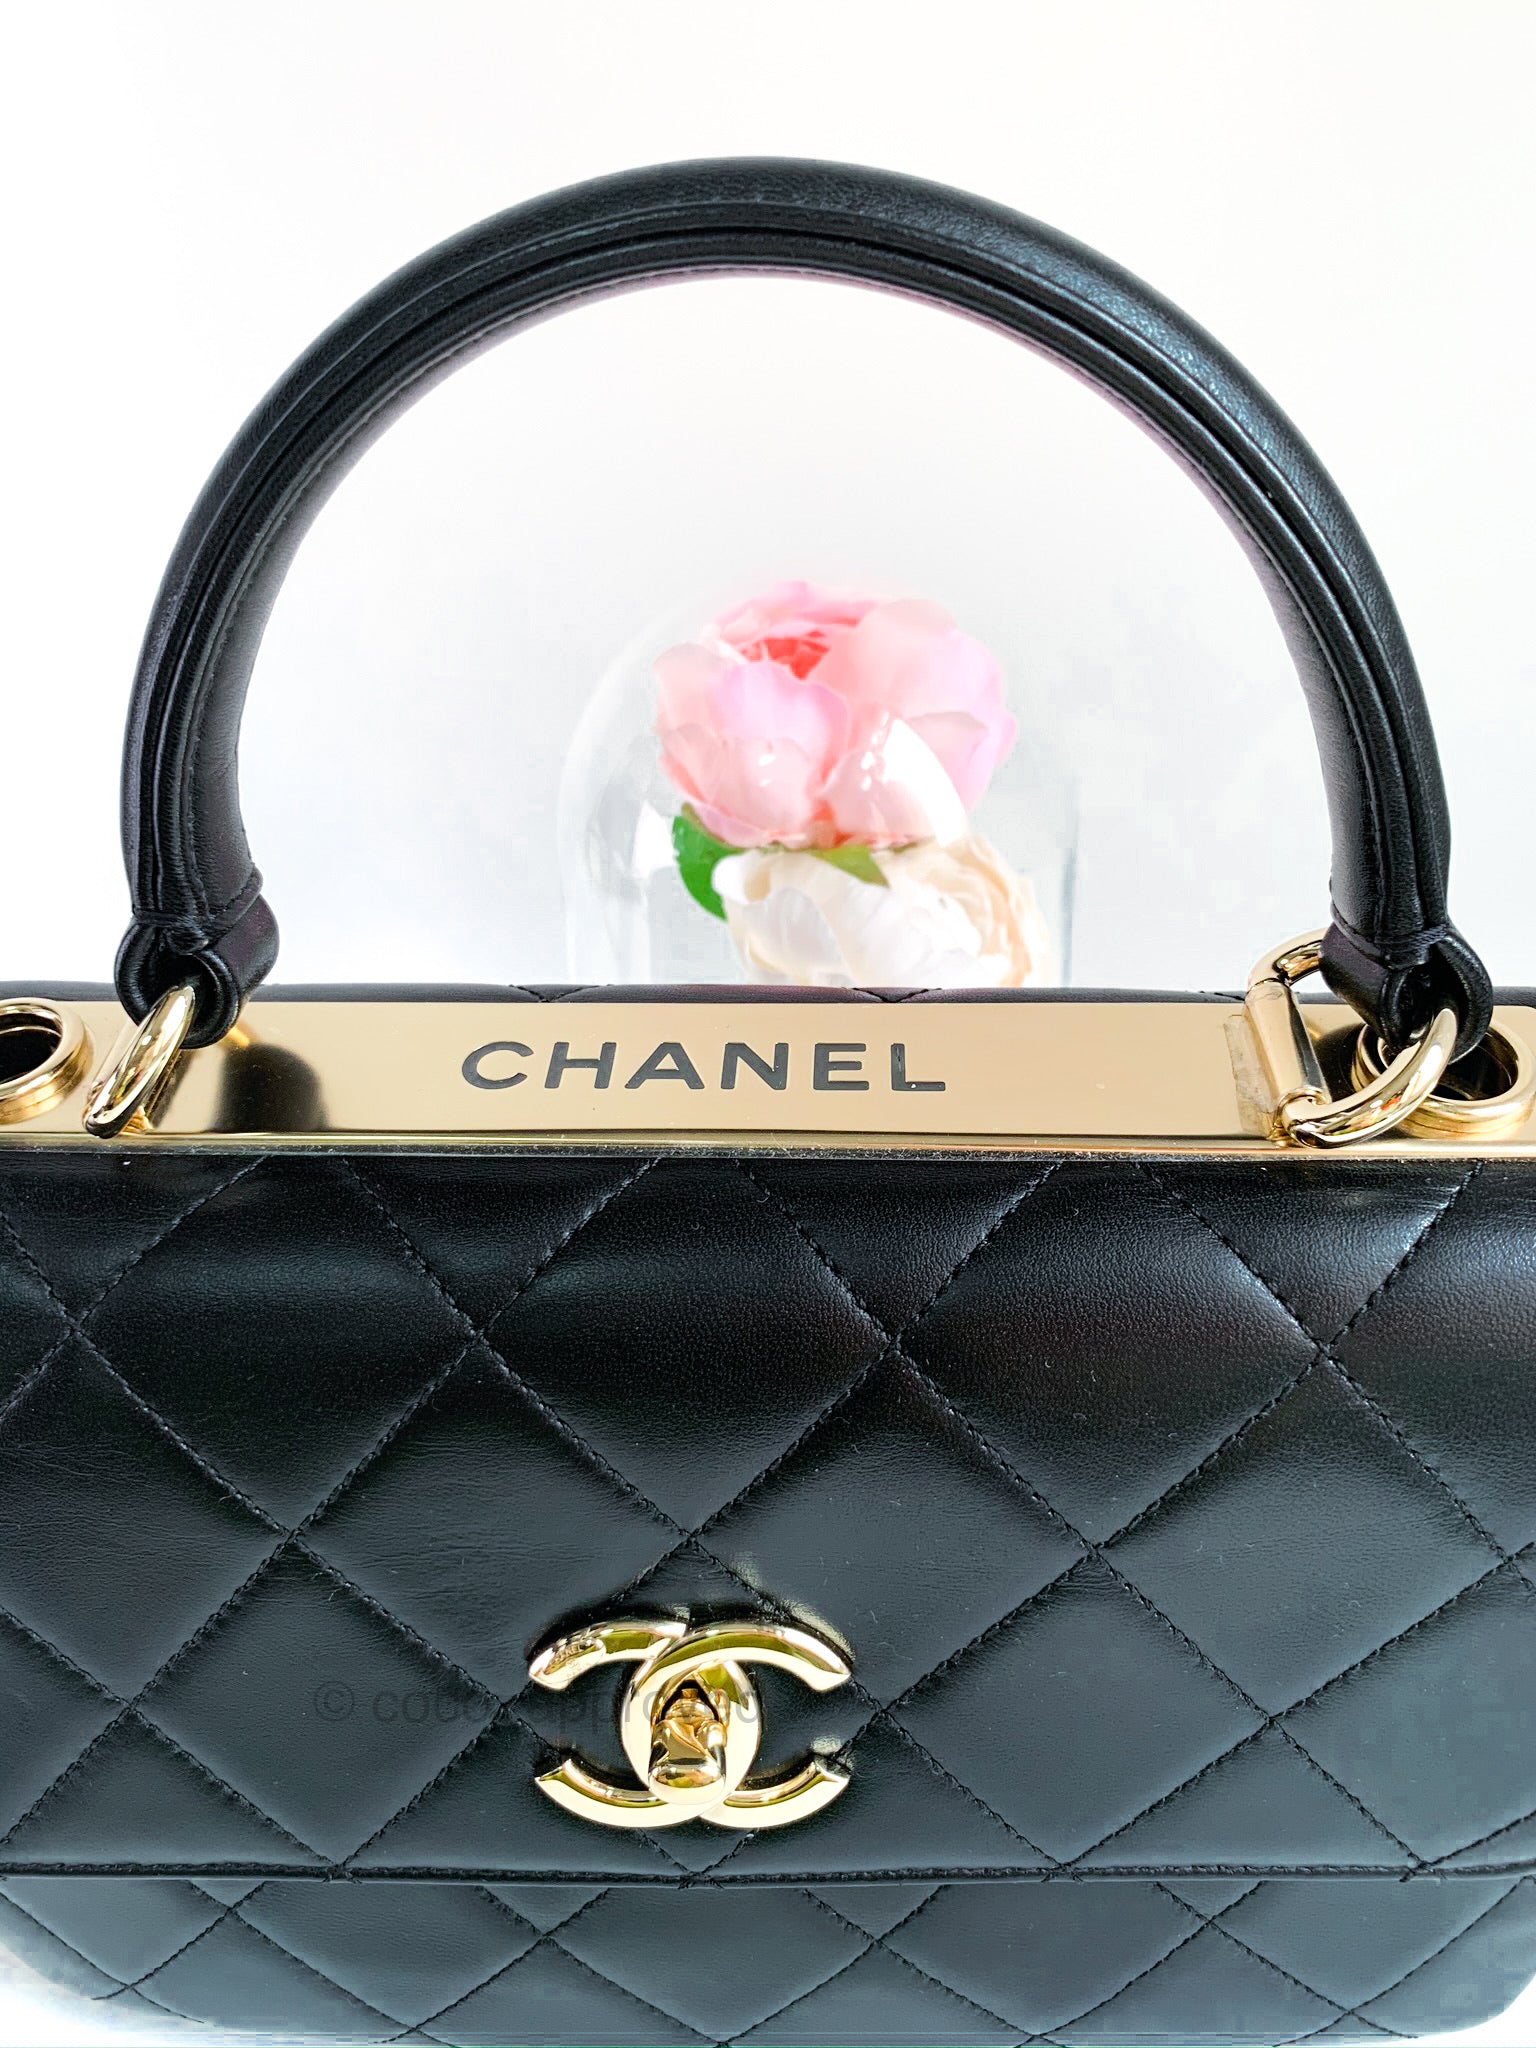 Chanel Trendy CC Small Black Lambskin Gold Hardware – Coco